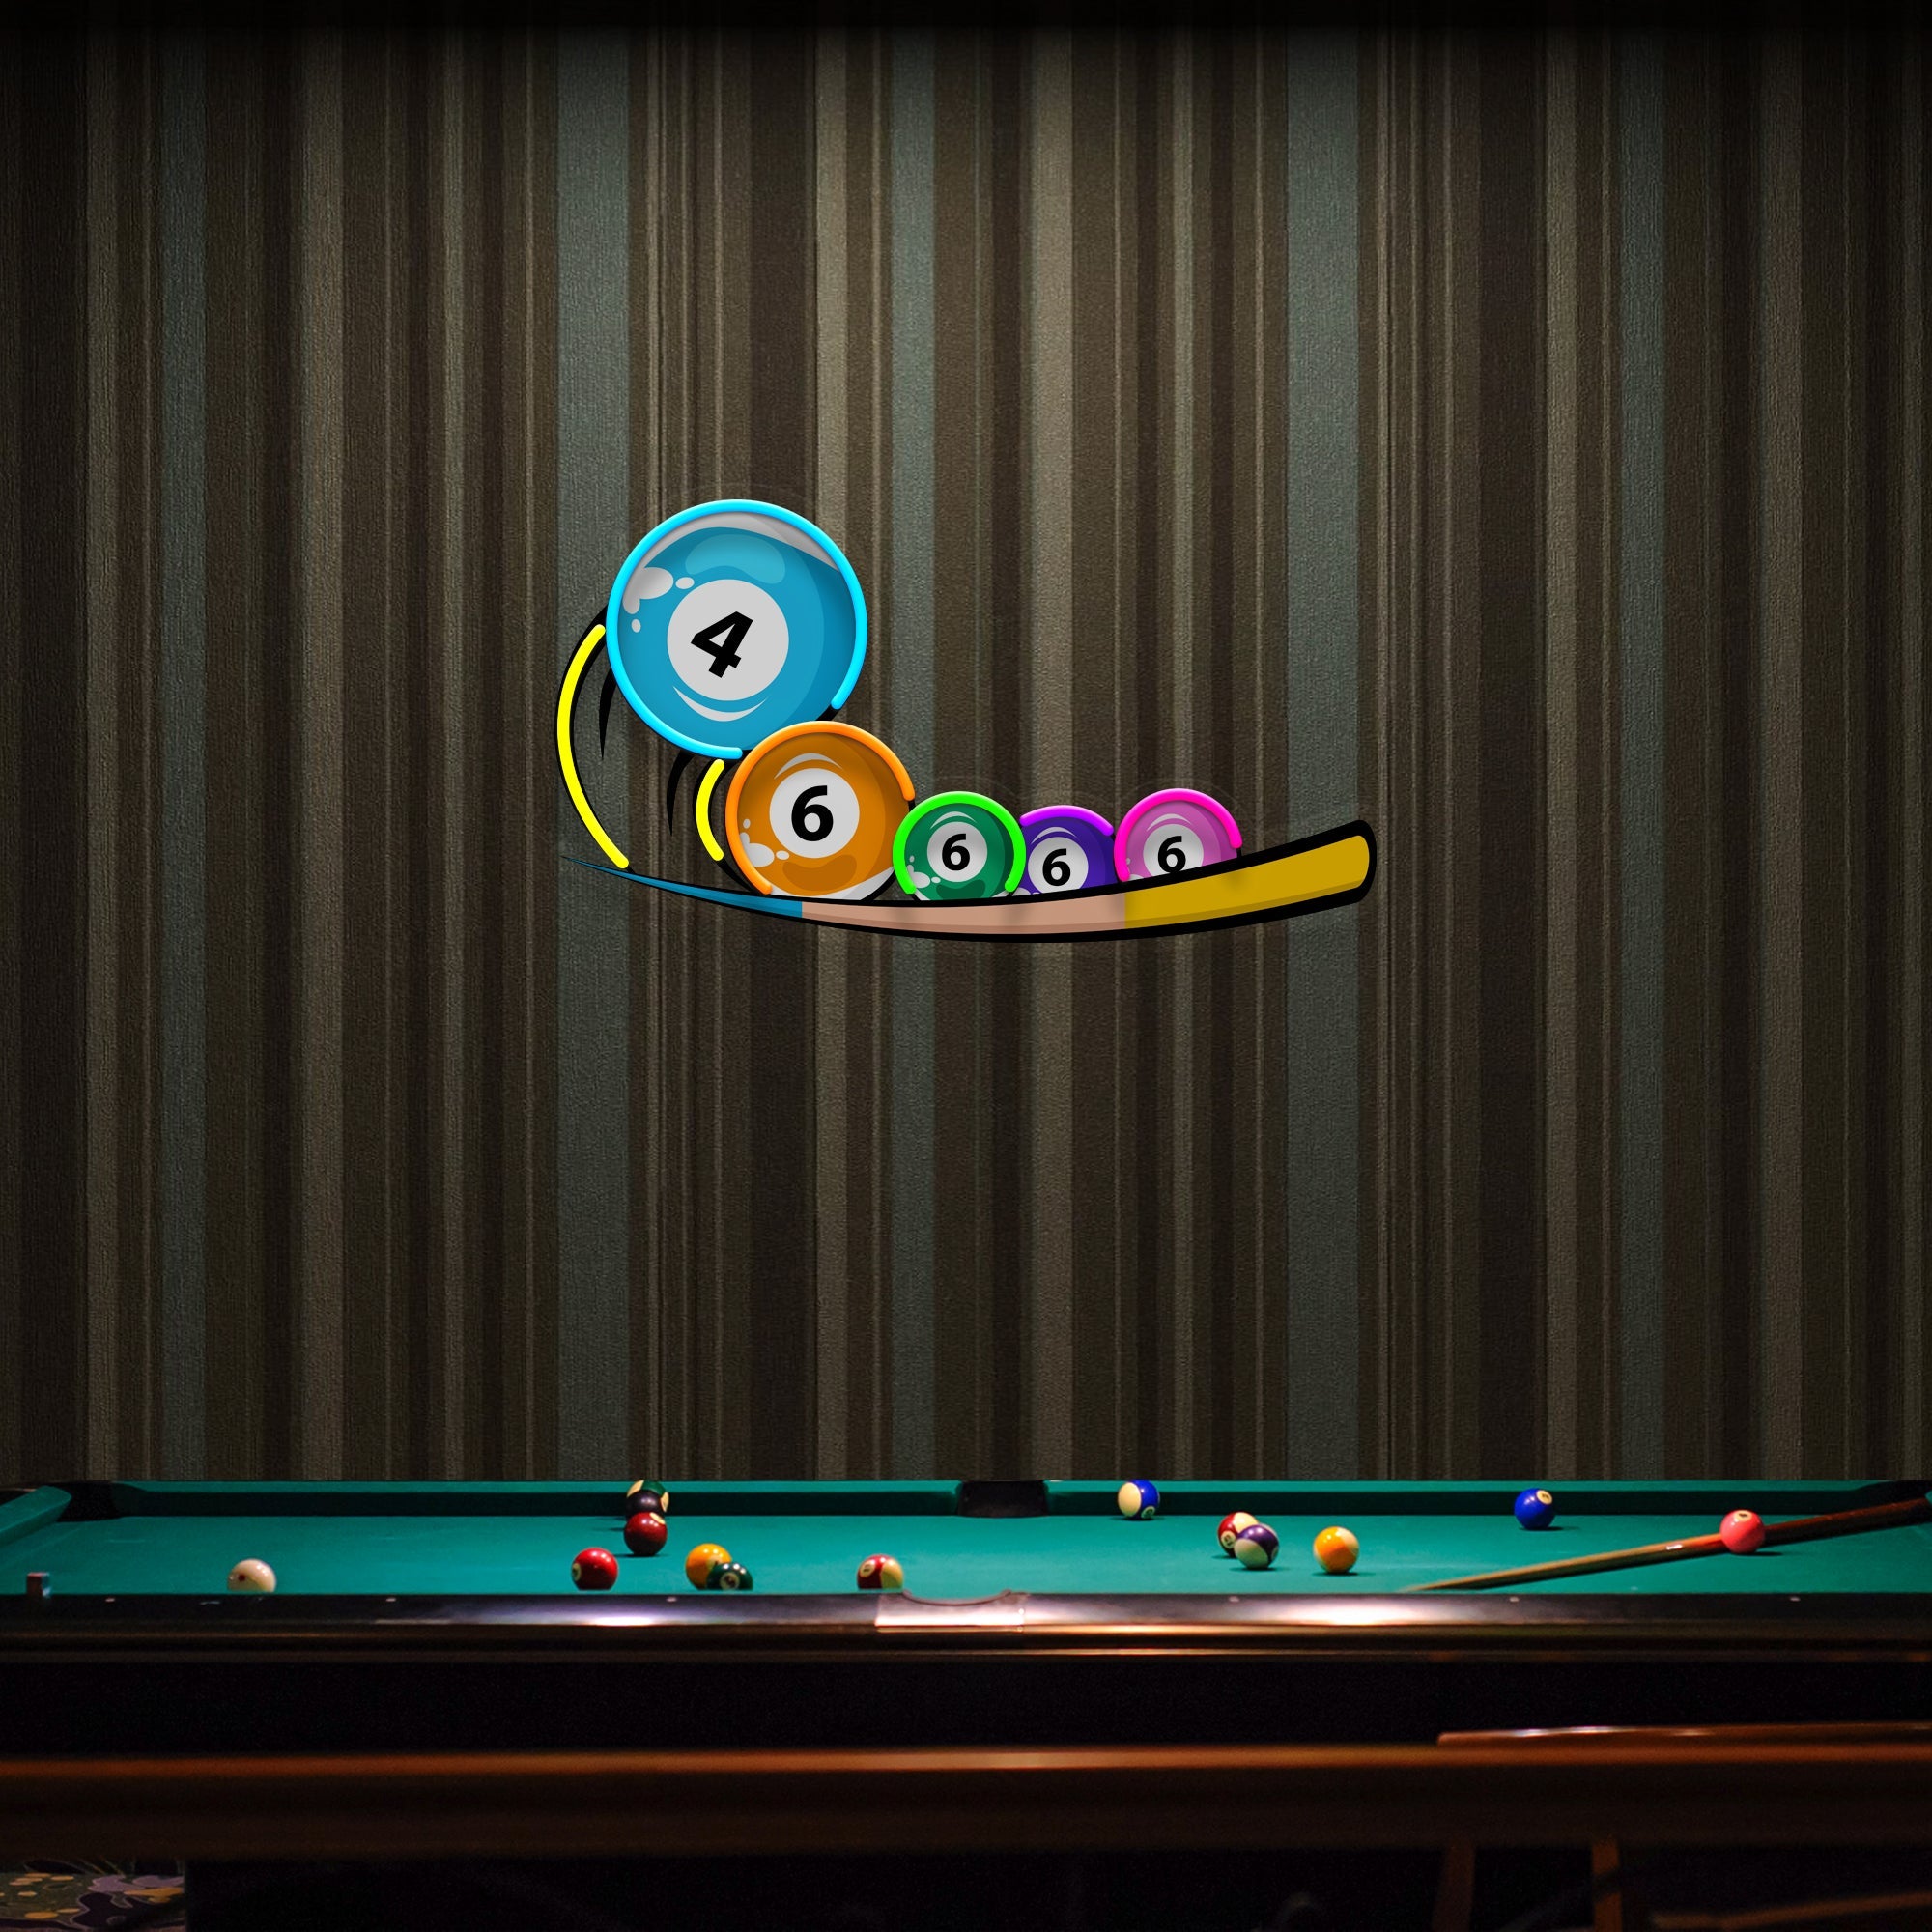 Billiard, Pool, Snooker Decor Artwork Led Neon Sign Light - Neonbir